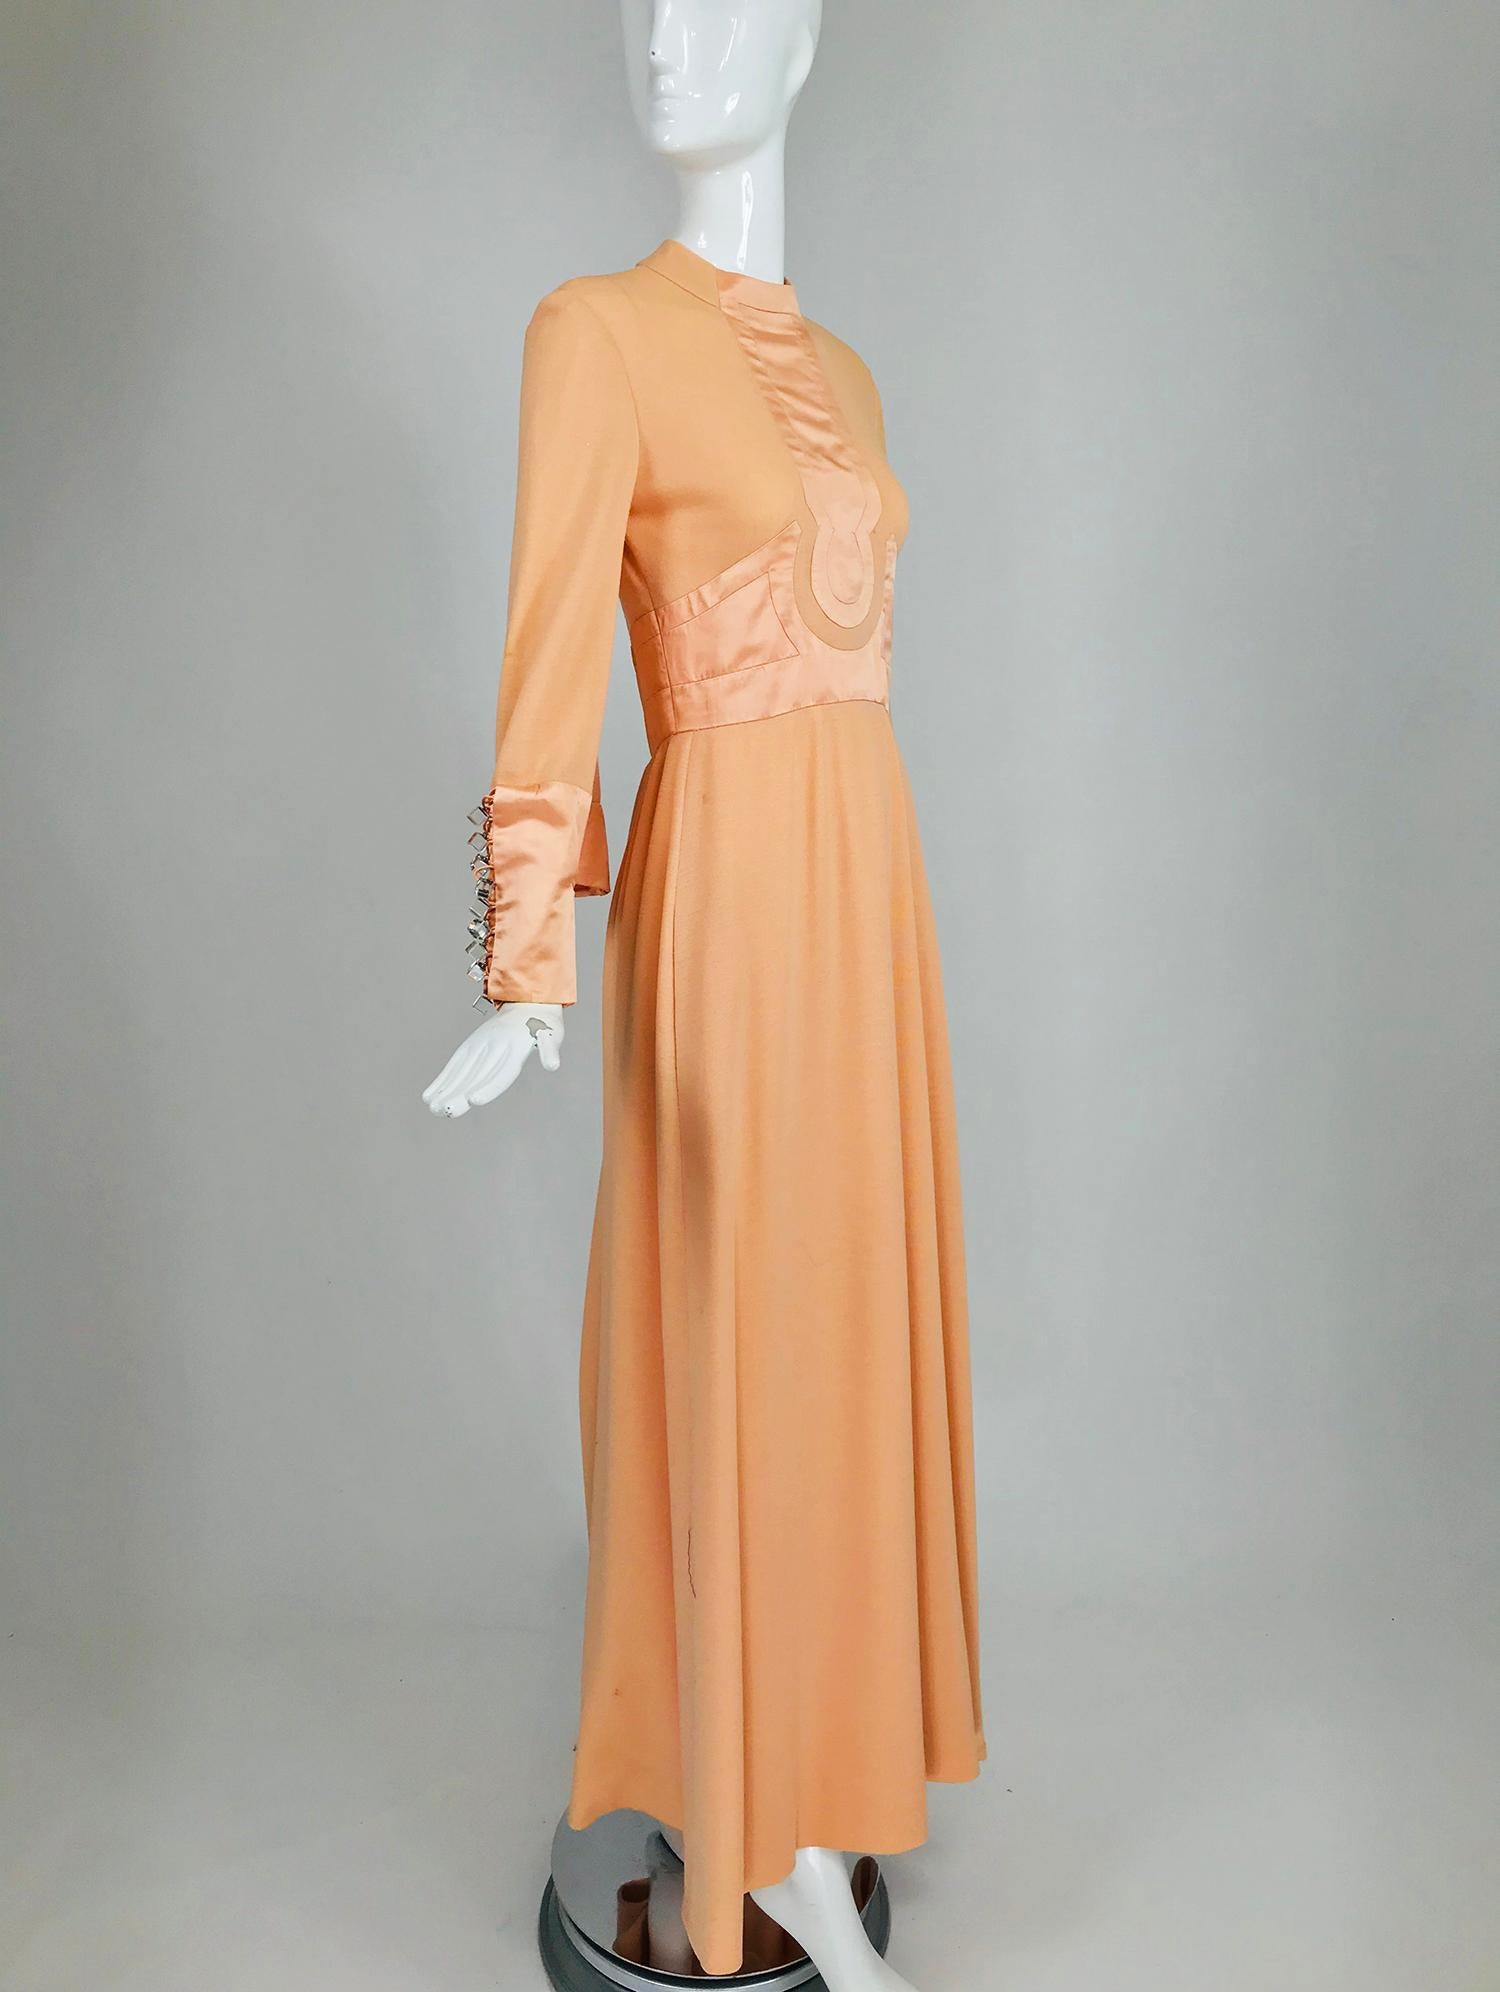 Orange Vintage Ronald Amey Peach Knit and Satin Mod Maxi Dress 1960s